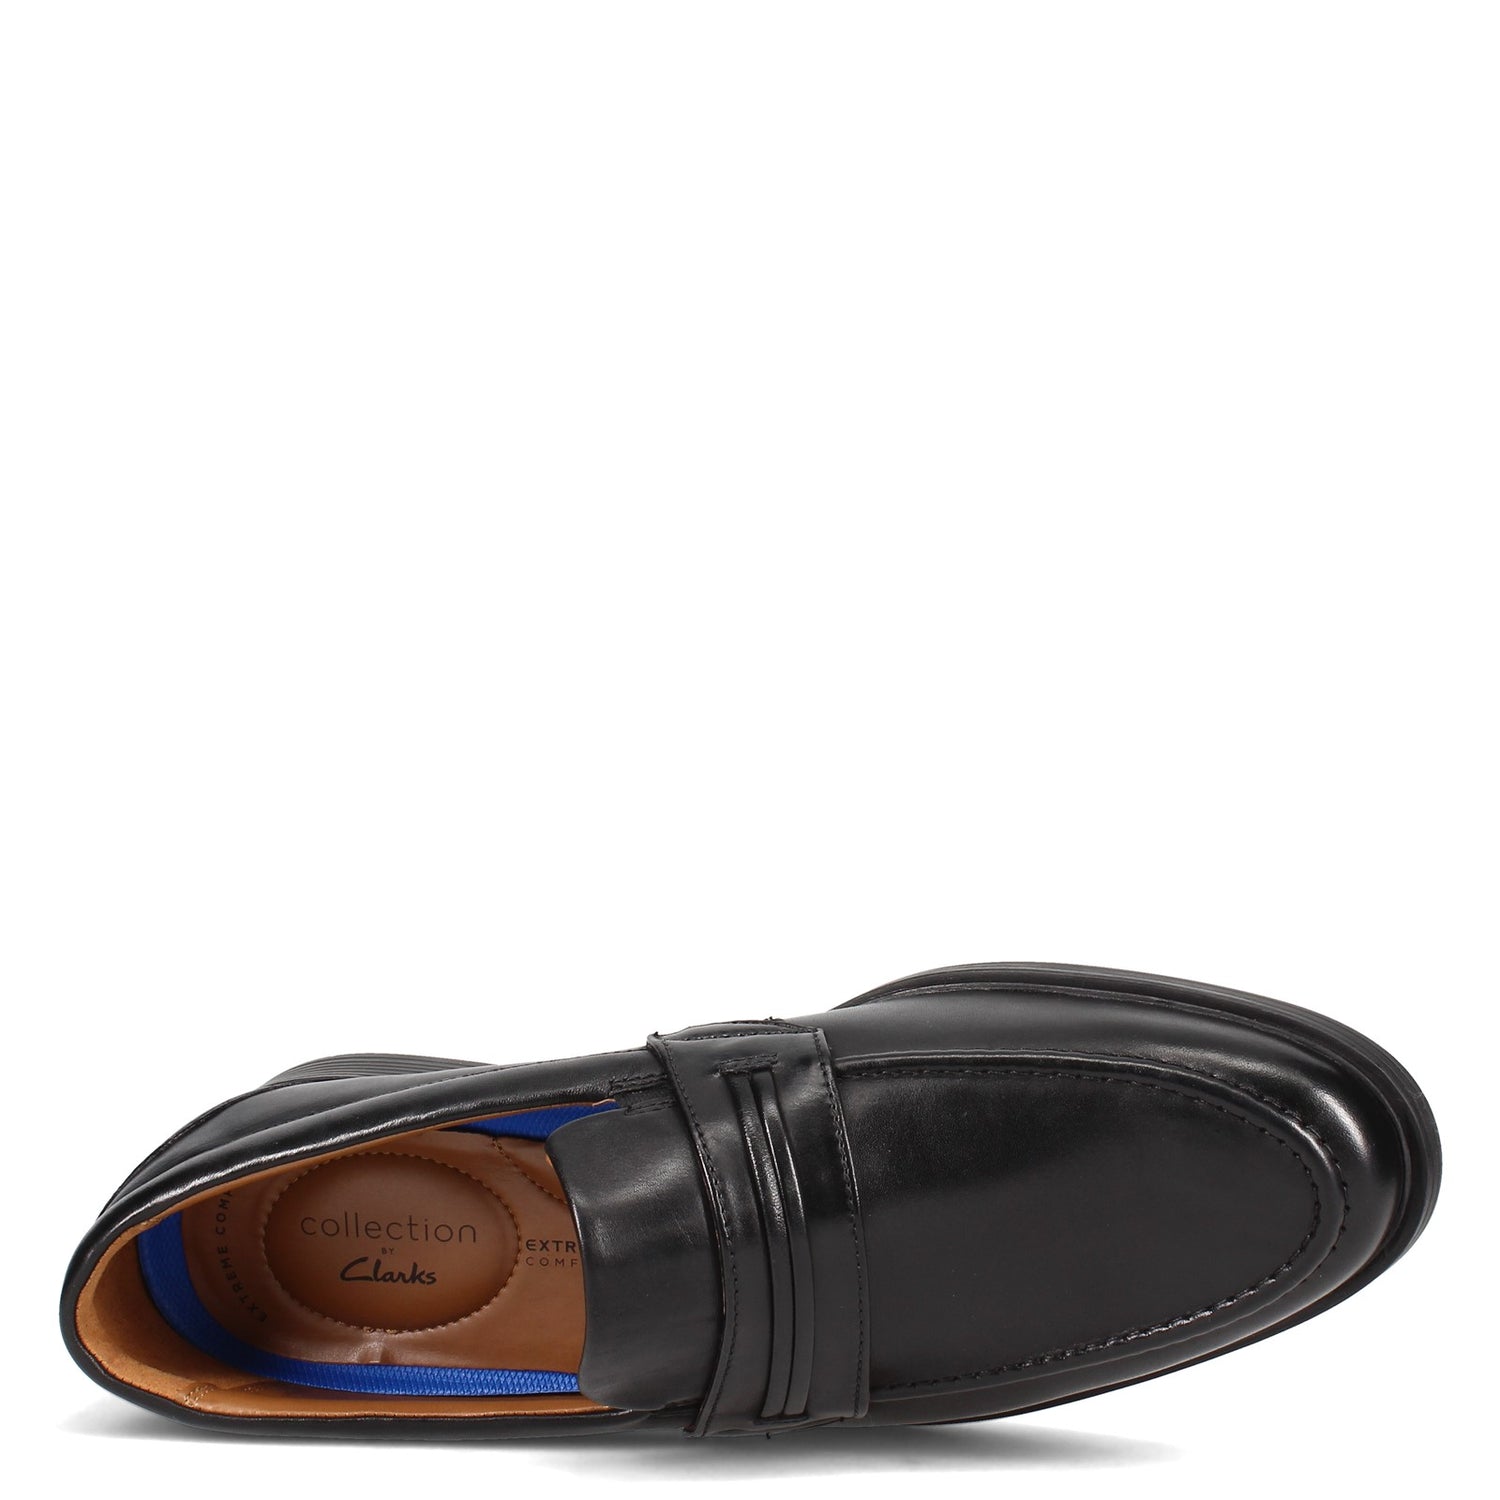 Peltz Shoes  Men's Clarks Whiddon Loafer BLACK 26158005